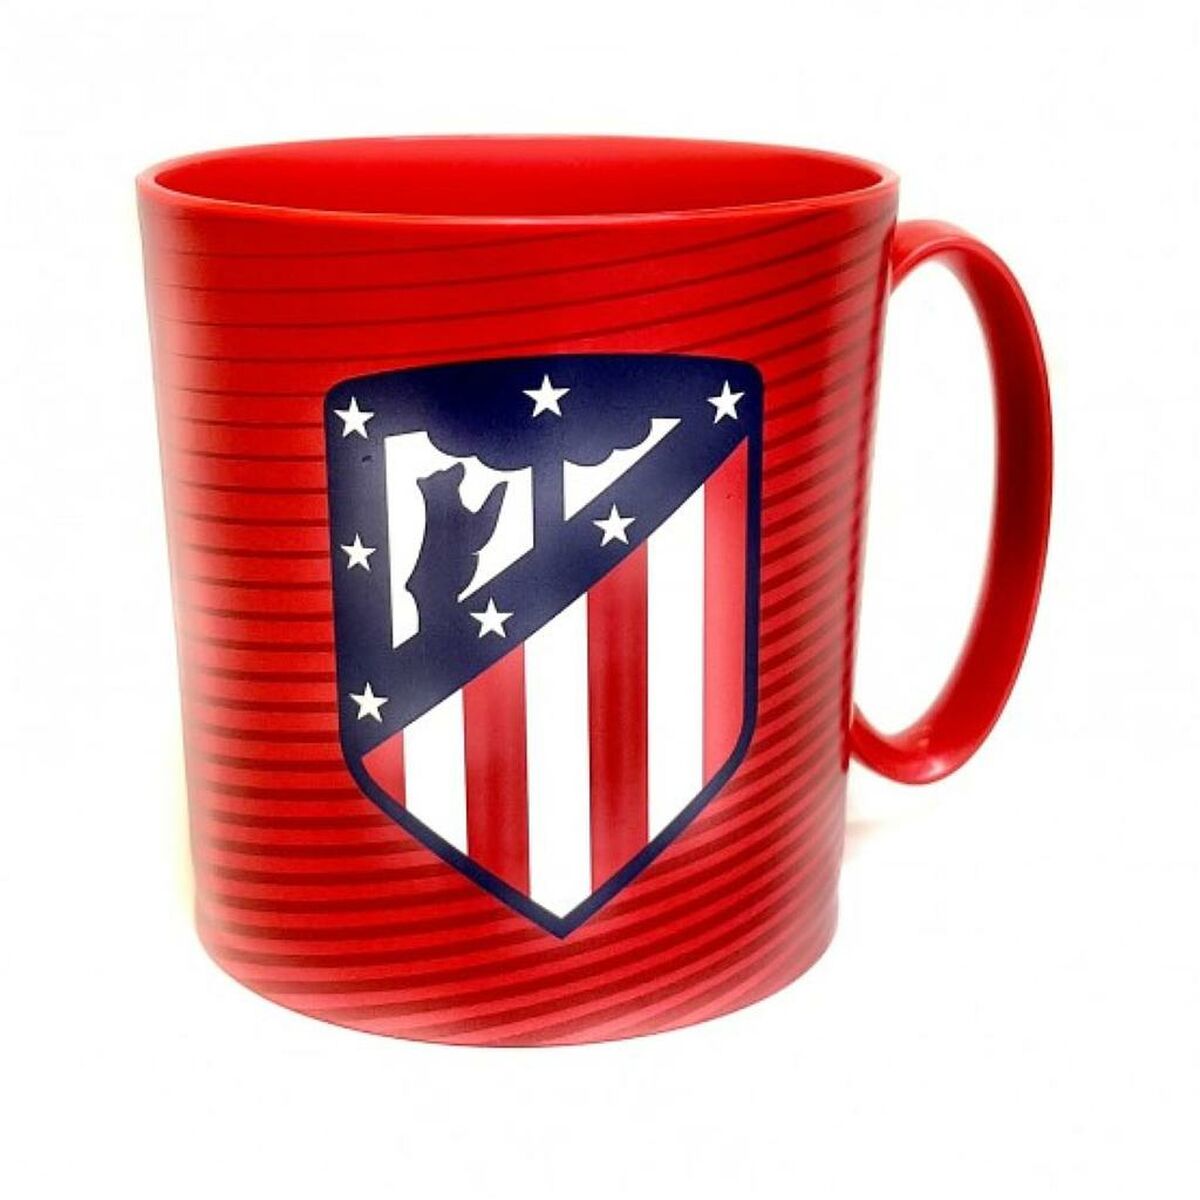 Taza Atlético de Madrid de porcelana